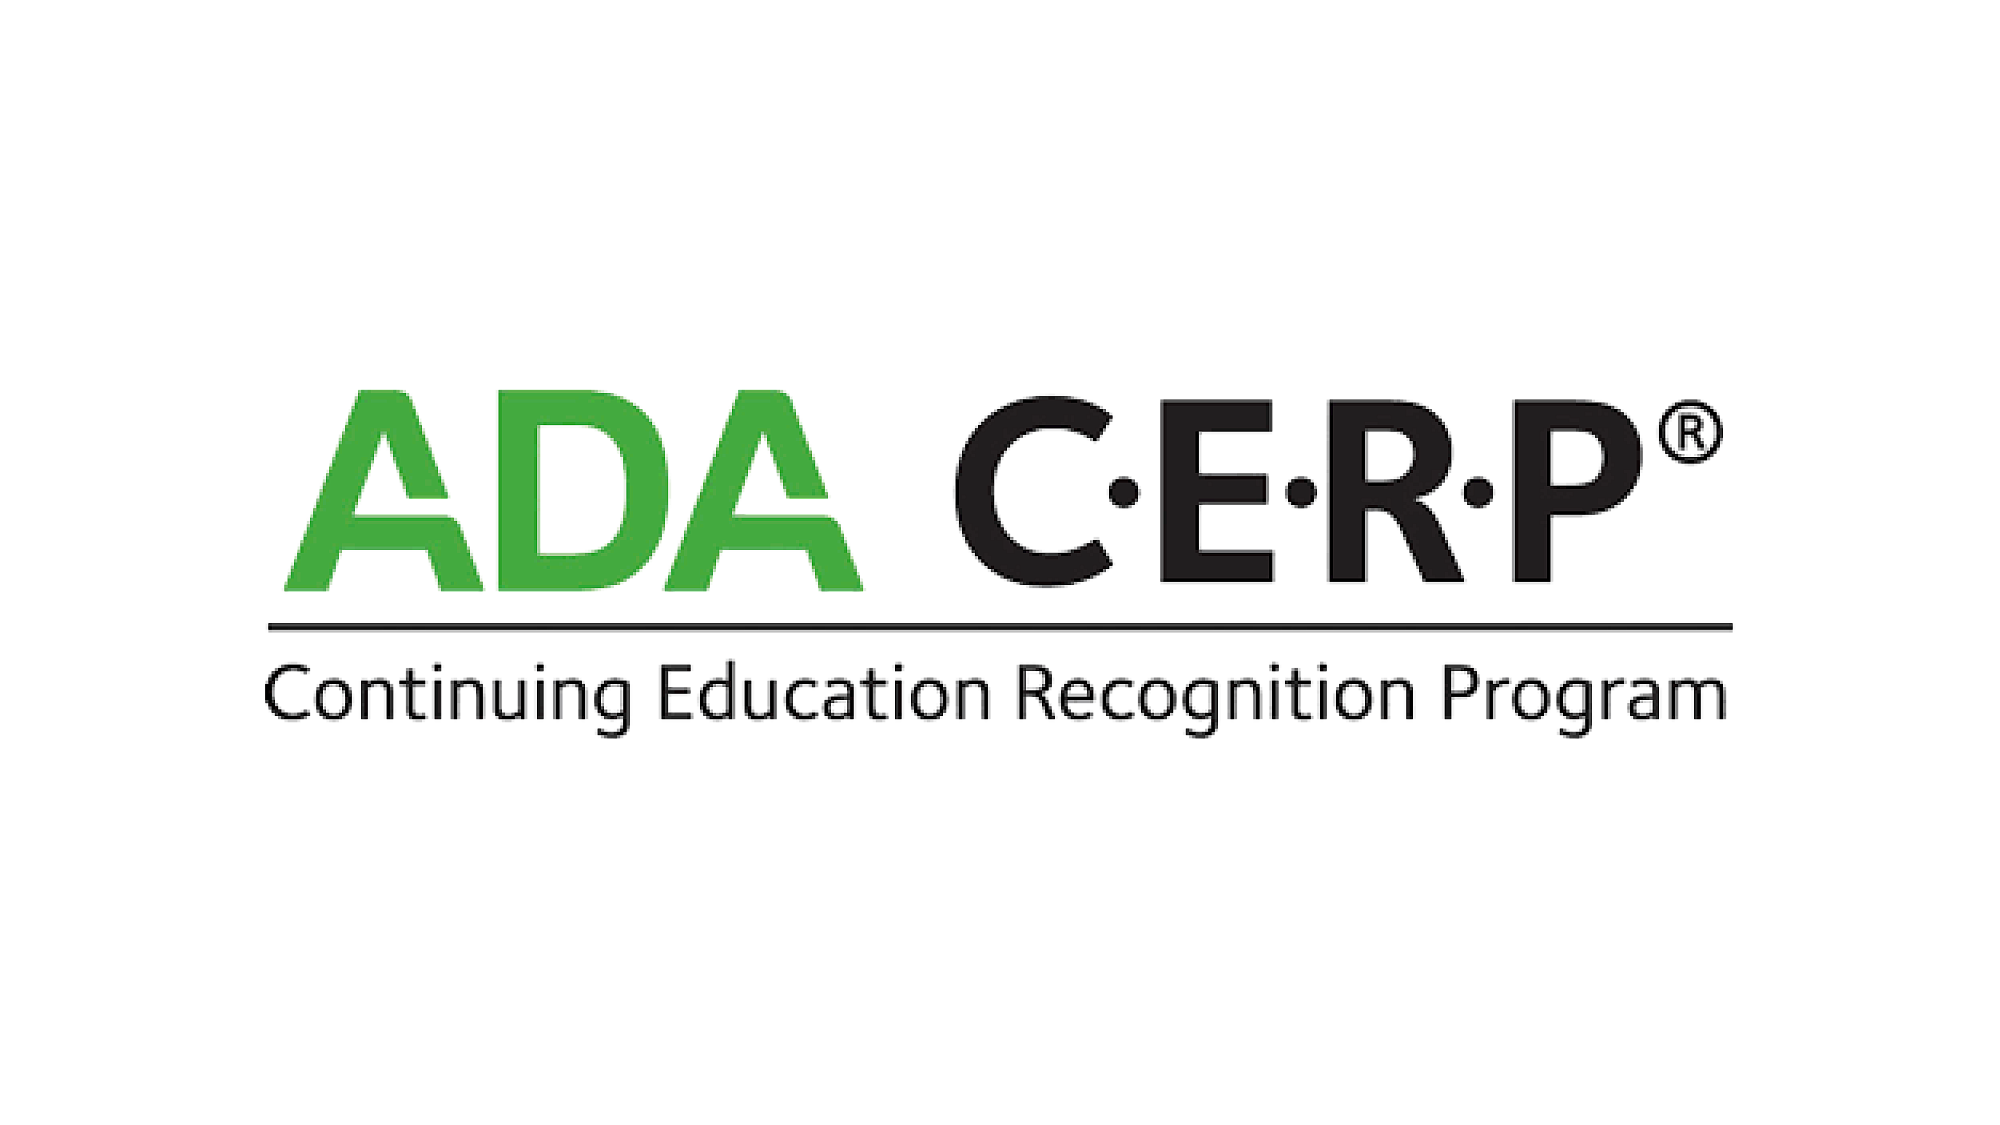 ADA CERP logo